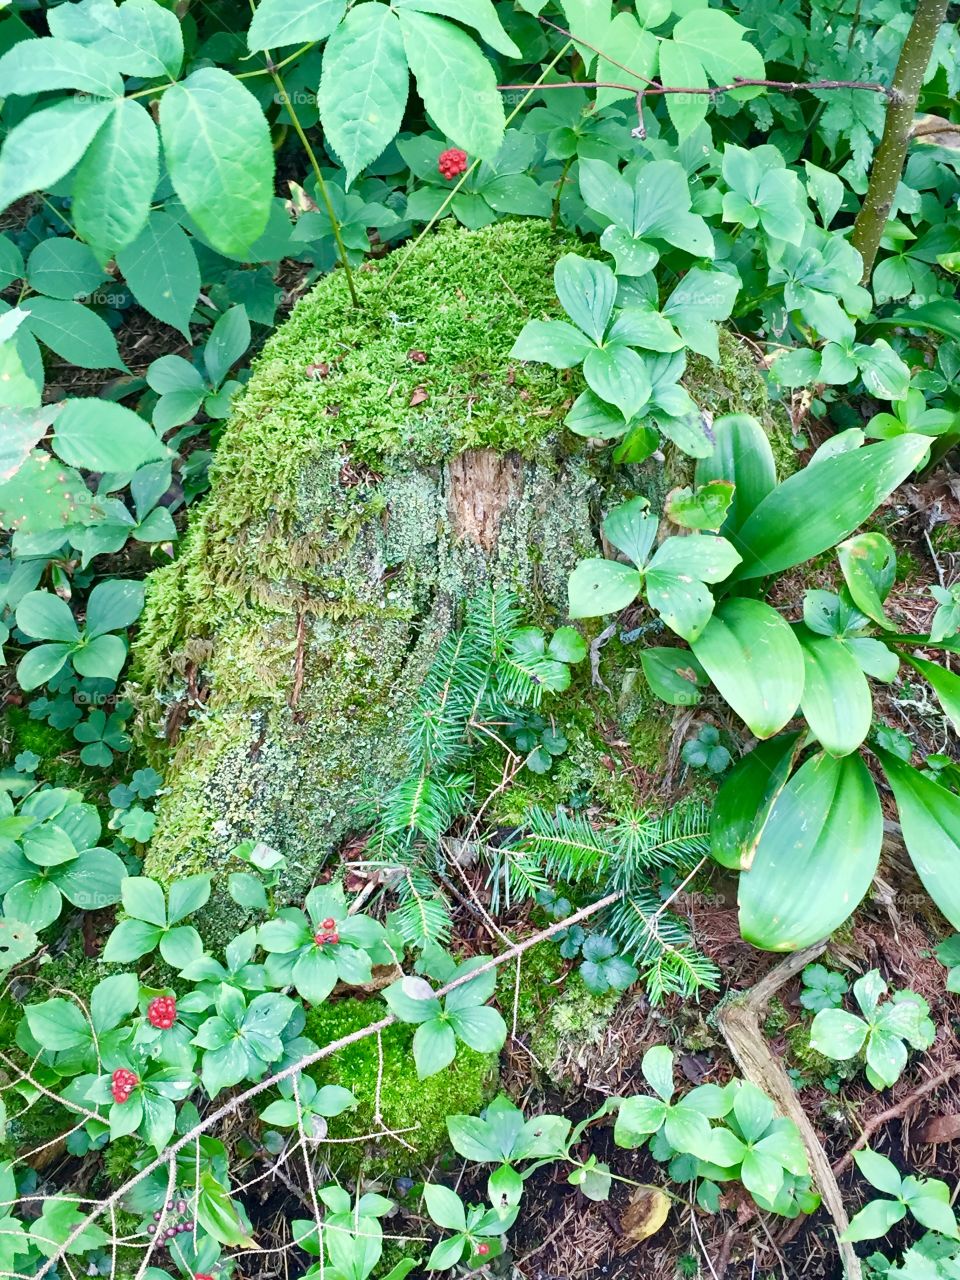 The Mossy Stump